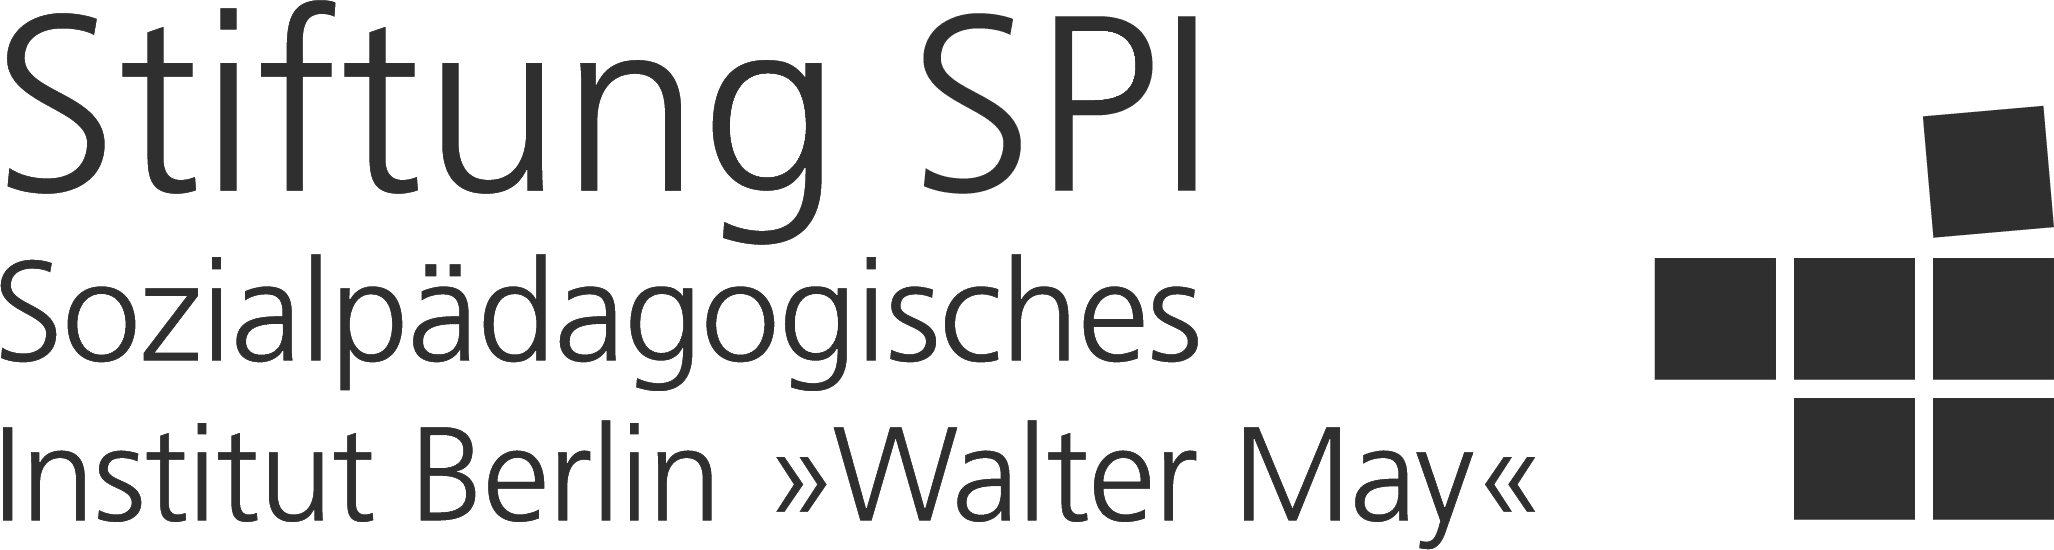 Stiftung SPI logo